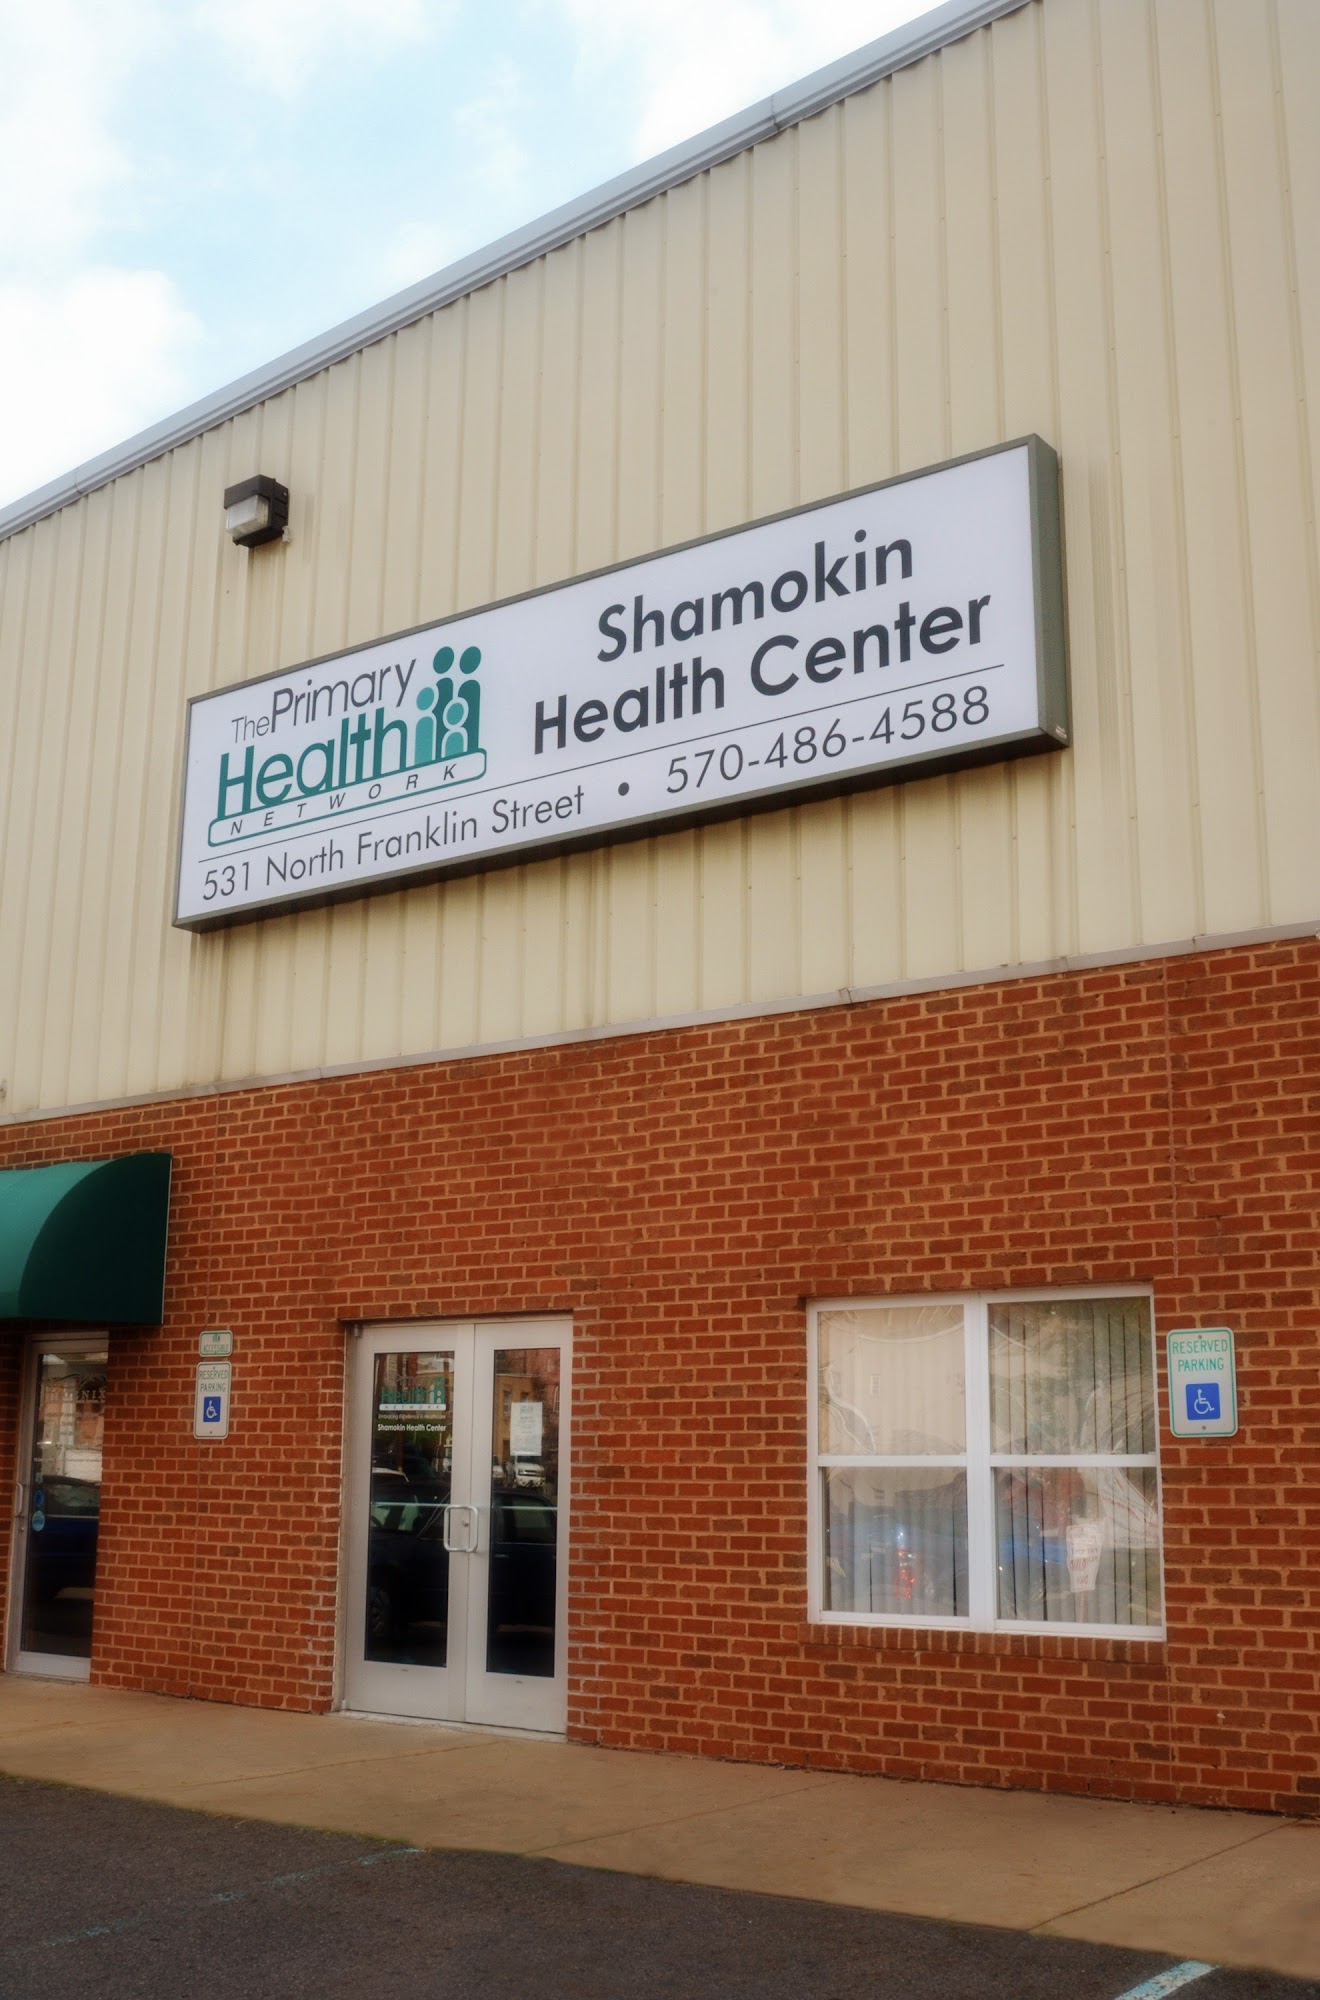 Shamokin Community Health Center | Primary Health Network 531 N Franklin St, Shamokin Pennsylvania 17872